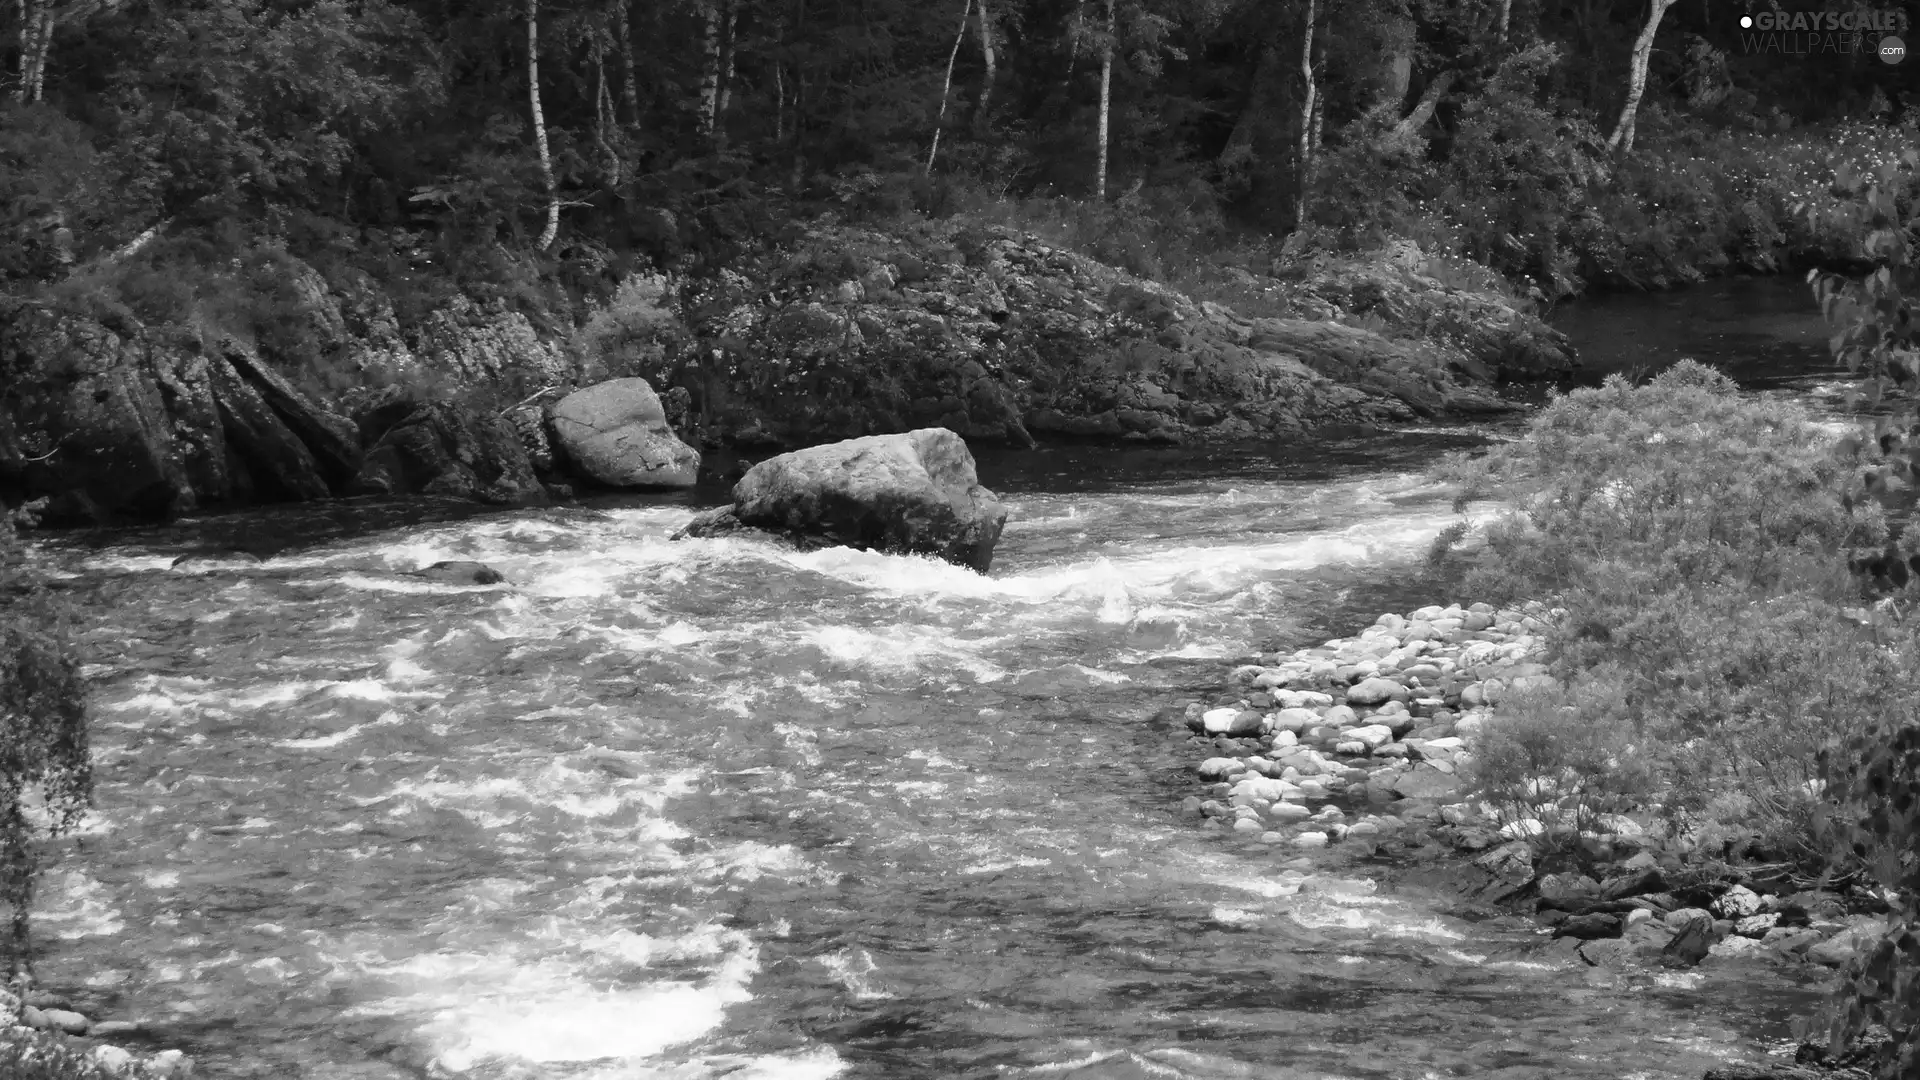 River, rocks, forest, Stones